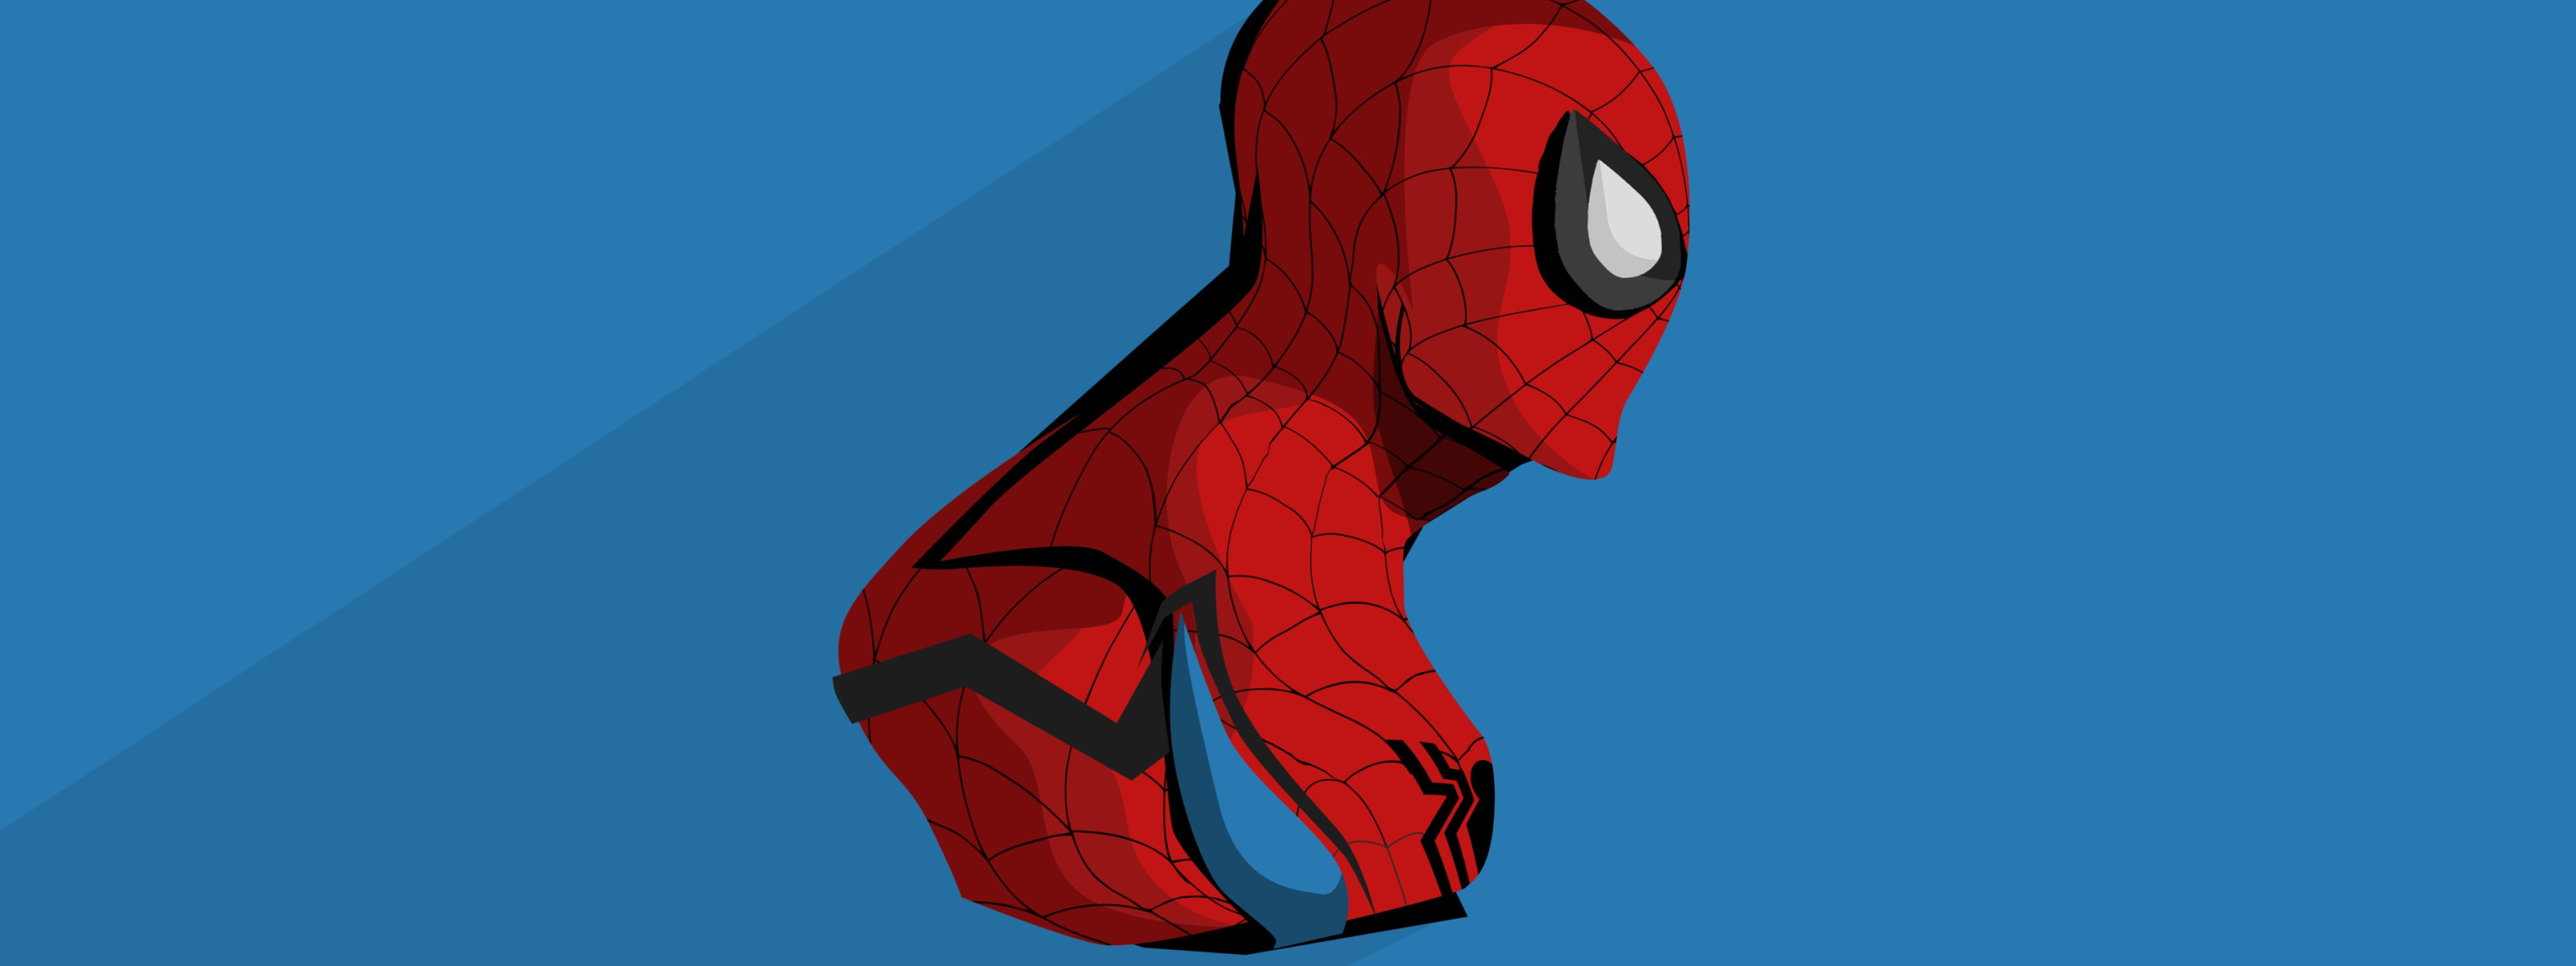 Download wallpaper blue, red, background, art, costume, comic, MARVEL, Spider  Man, Spider-Man, section minimalism in resolution 3200x1200